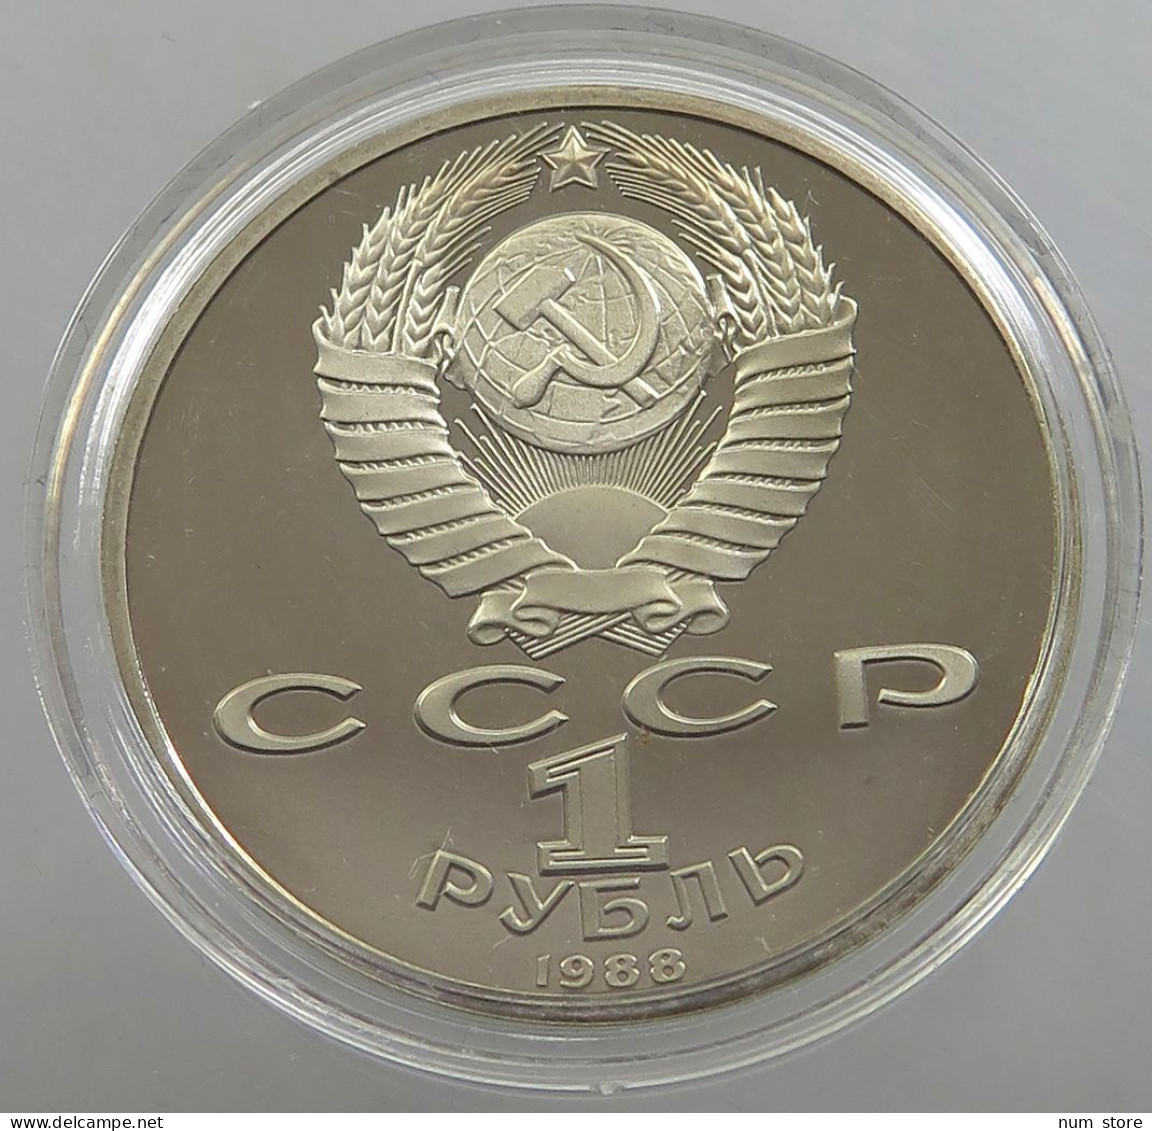 RUSSIA USSR 1 ROUBLE 1988 GORKI PROOF #sm14 0537 - Rusland